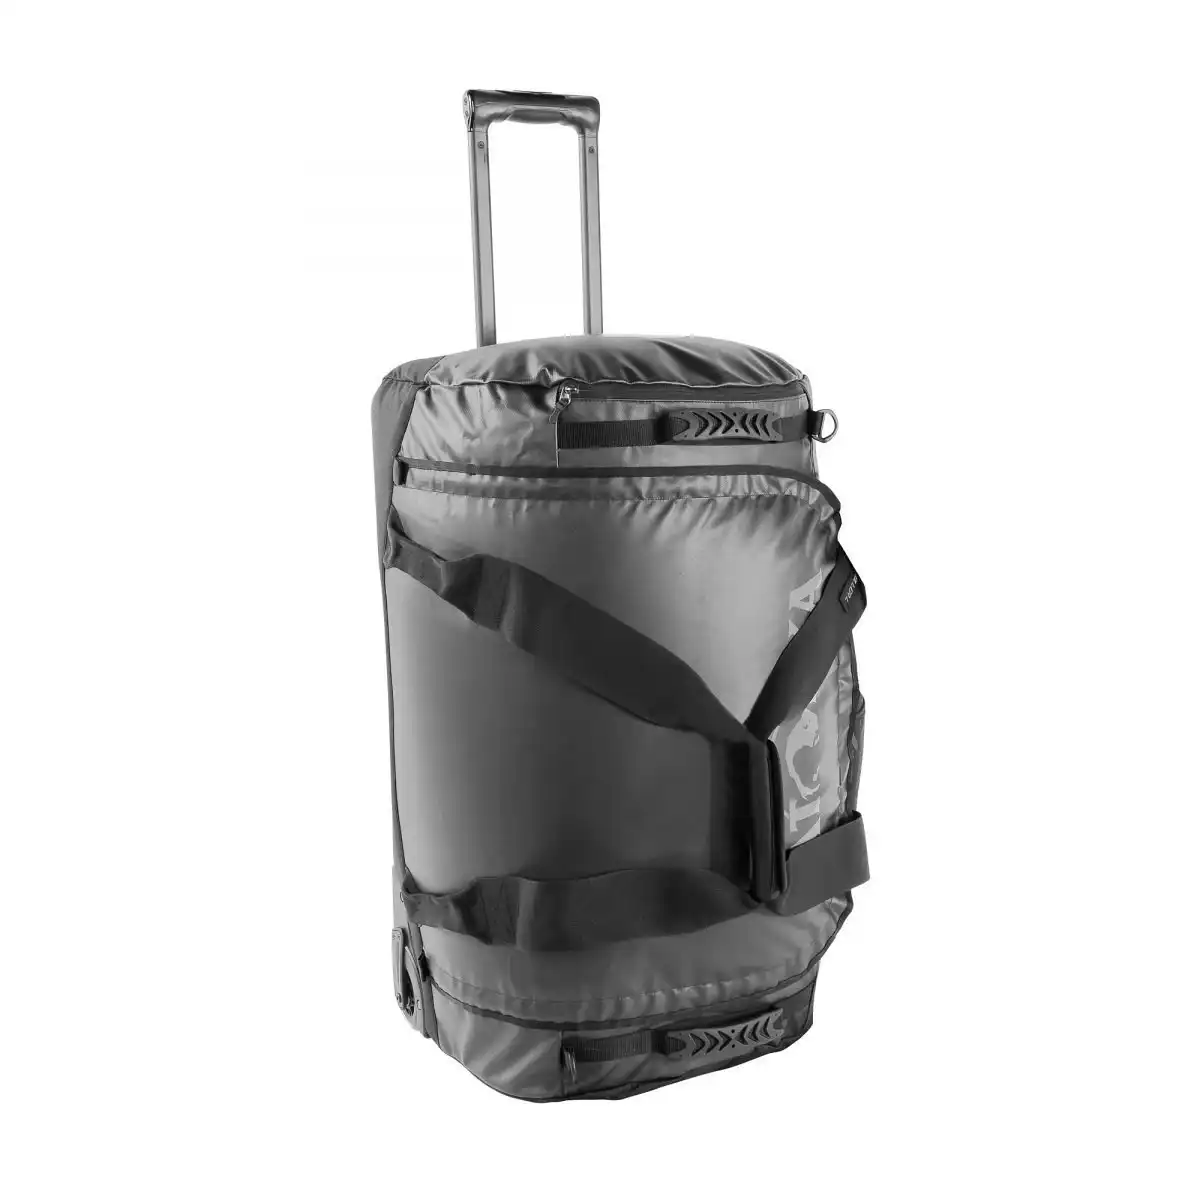 Tatonka 75cm 80L Barrel Travel Bag Roller/Luggage/Suitcase w/Wheels Large Black